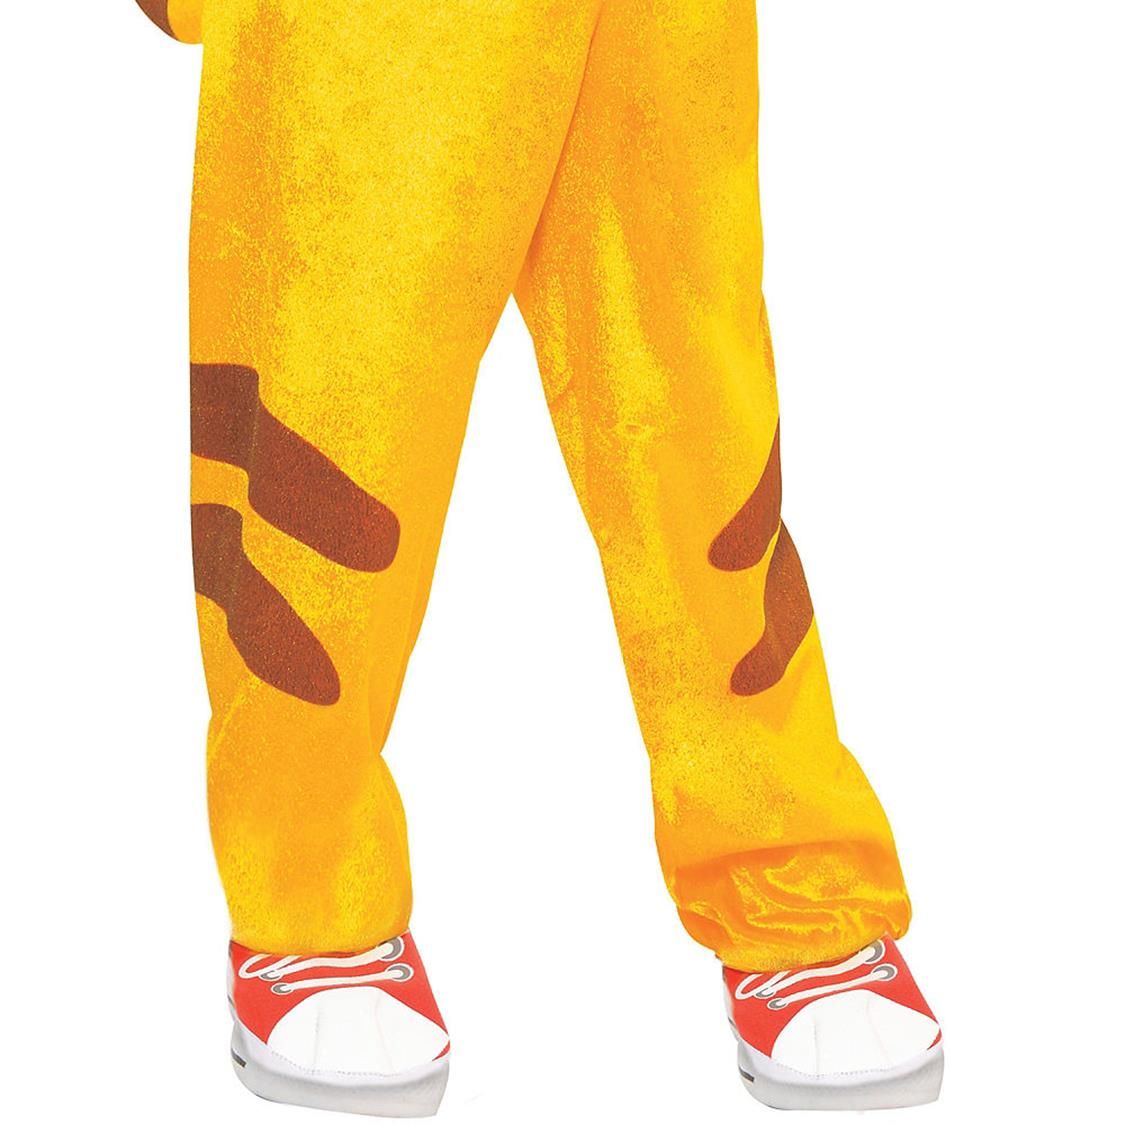 Daniel Tiger's Neighborhood Daniel Tiger Toddler Costume- Jumpsuit,  Medium/3T-4T